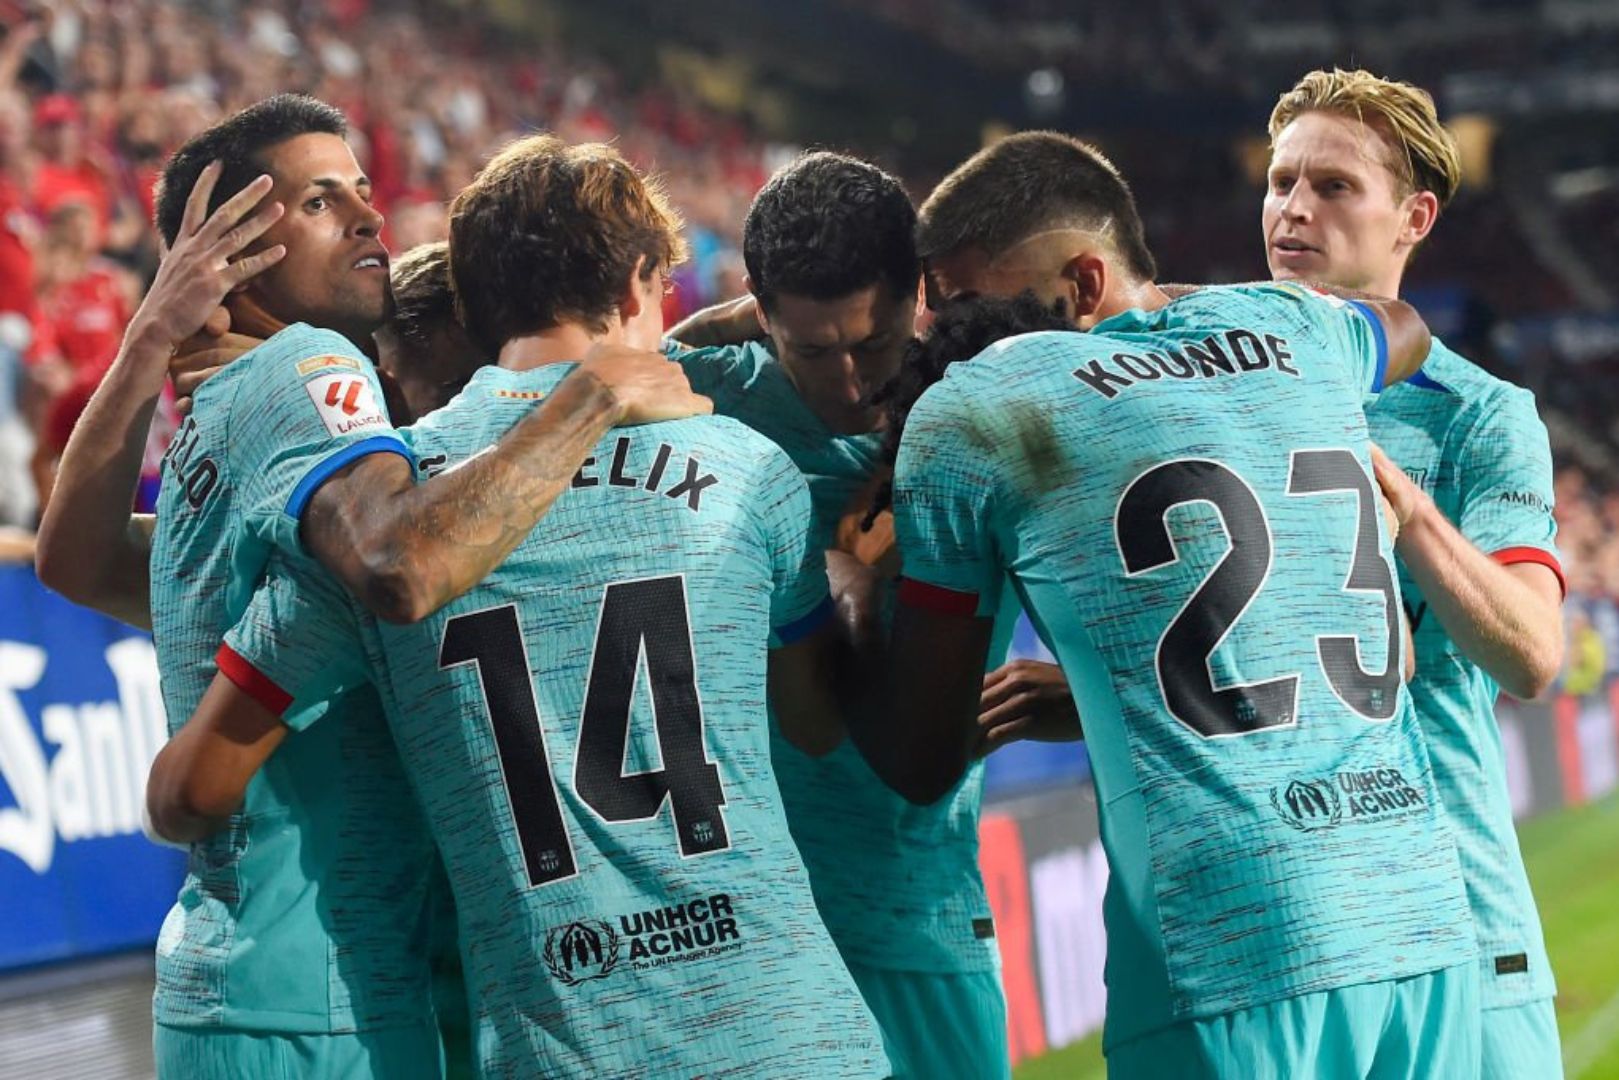 Barcelona players celebrating